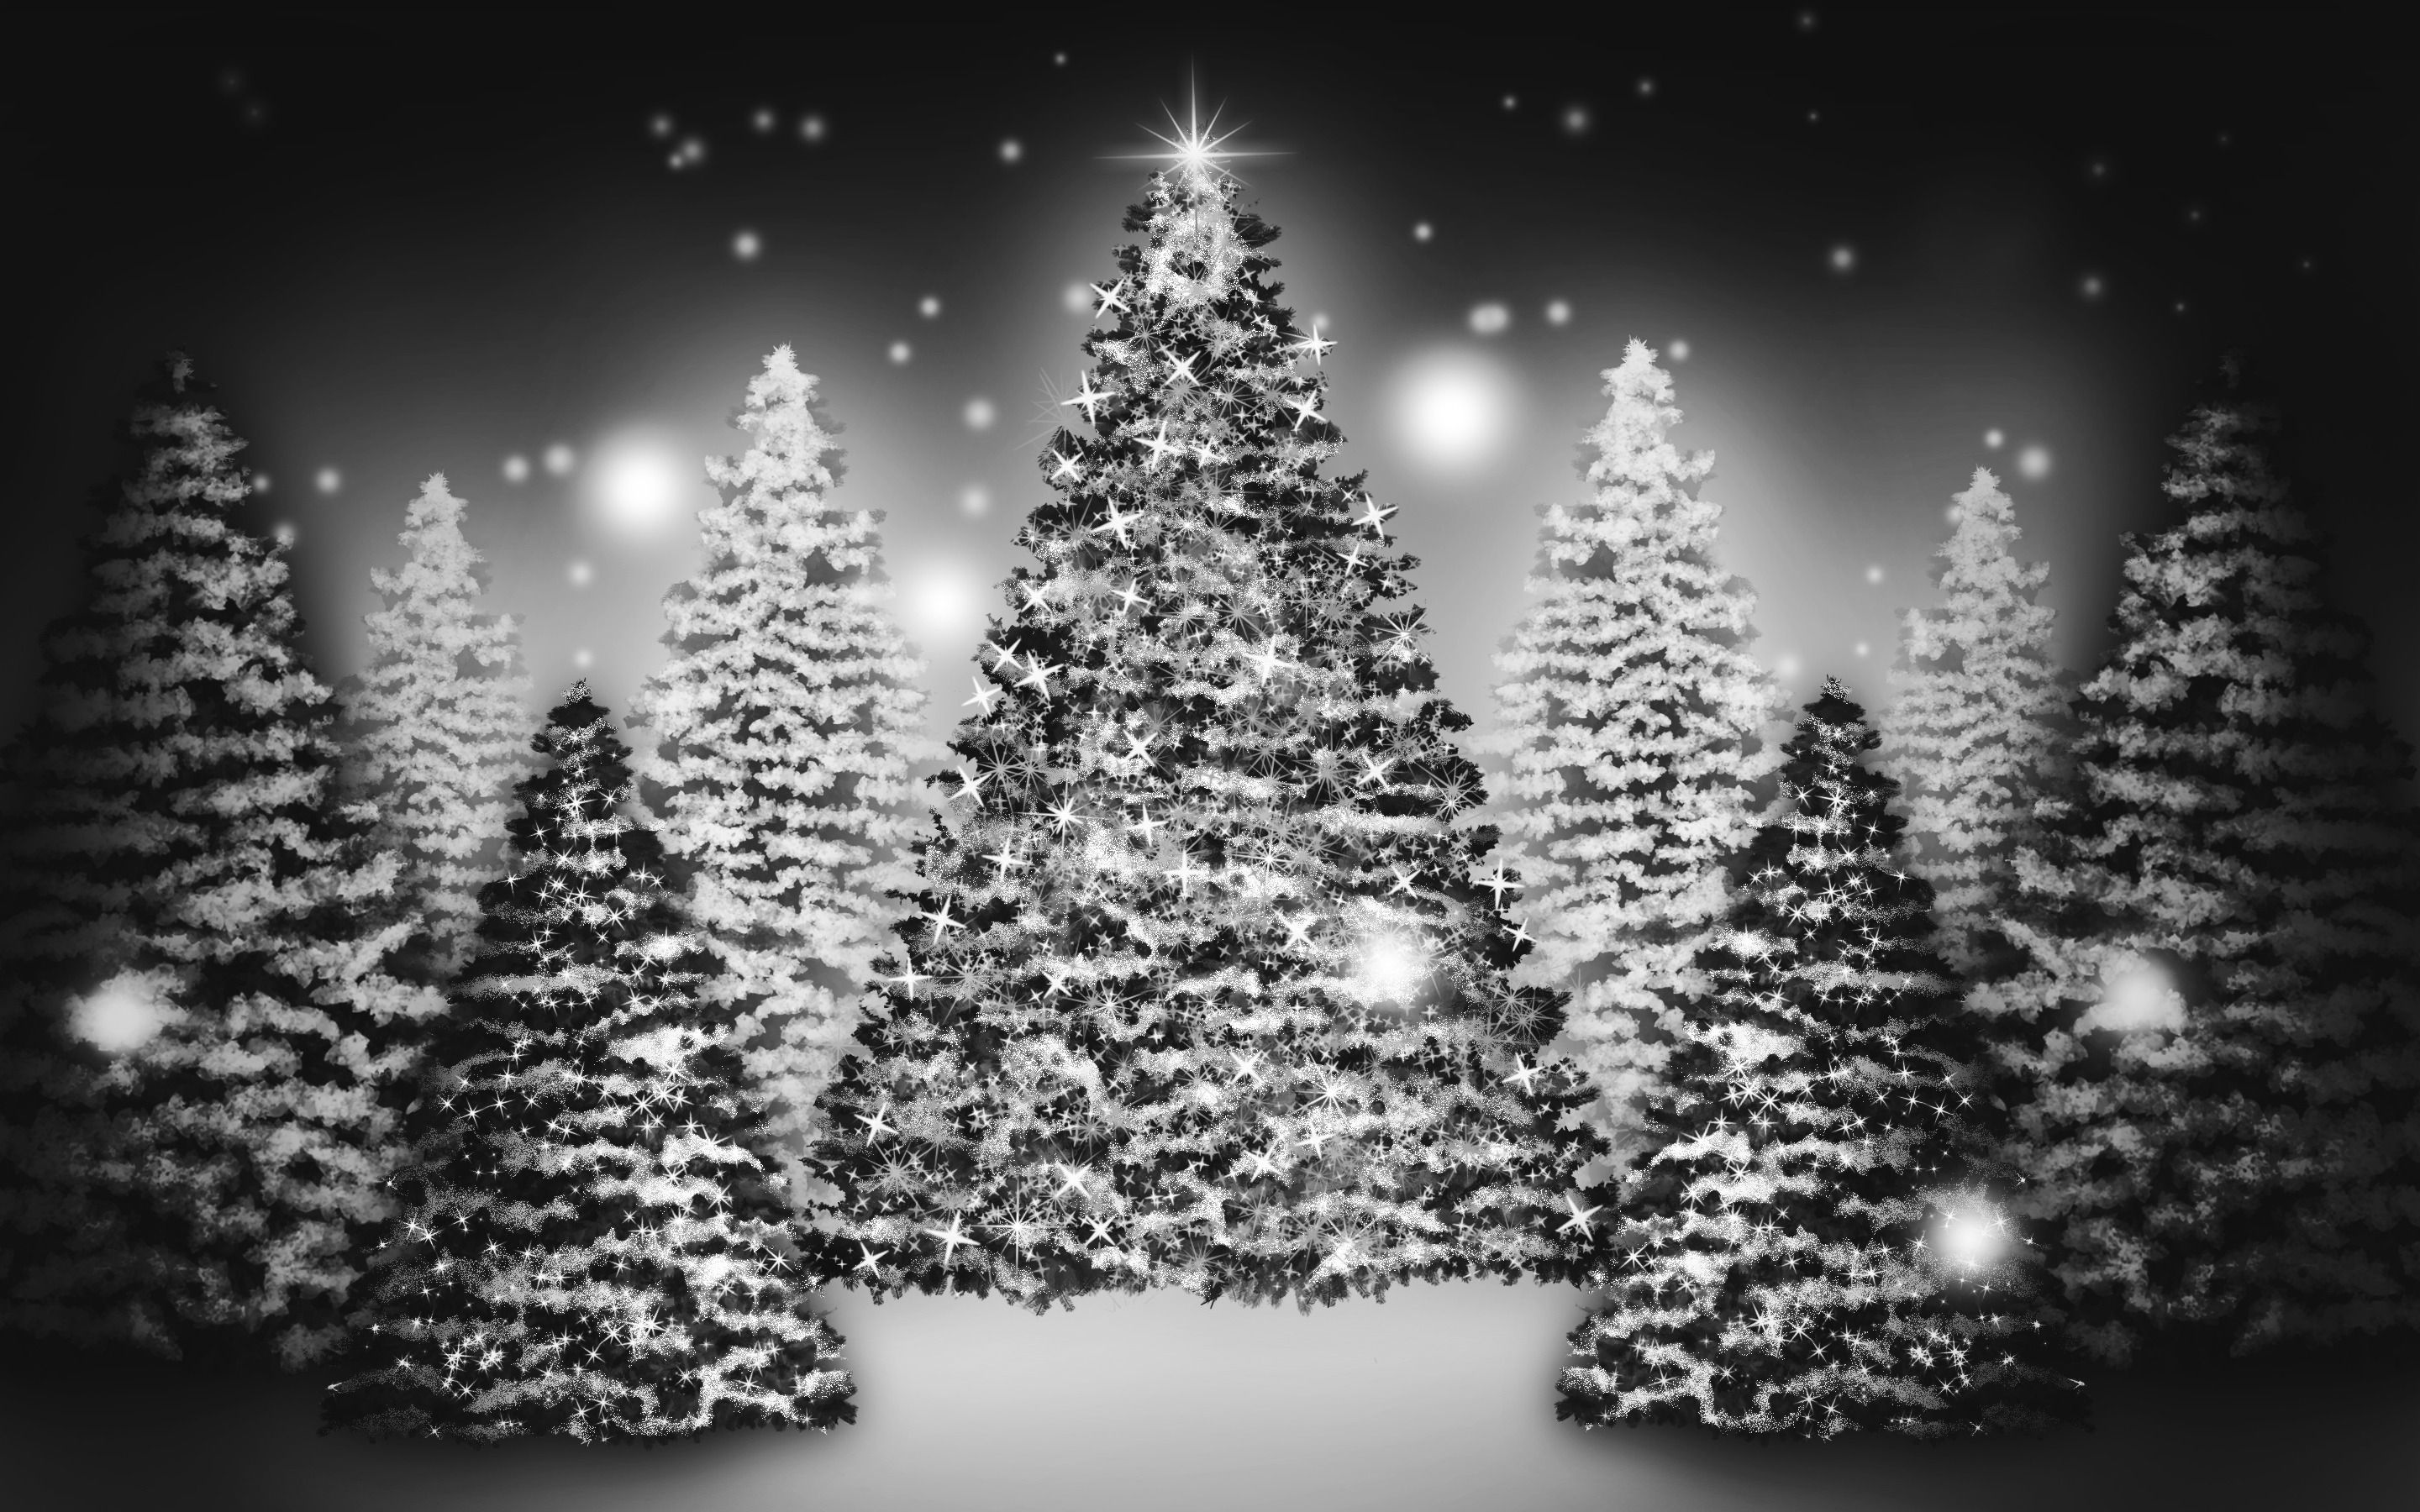 Beautiful Christmas tree Wallpaper. Christmas tree wallpaper, Christmas tree, Black christmas trees